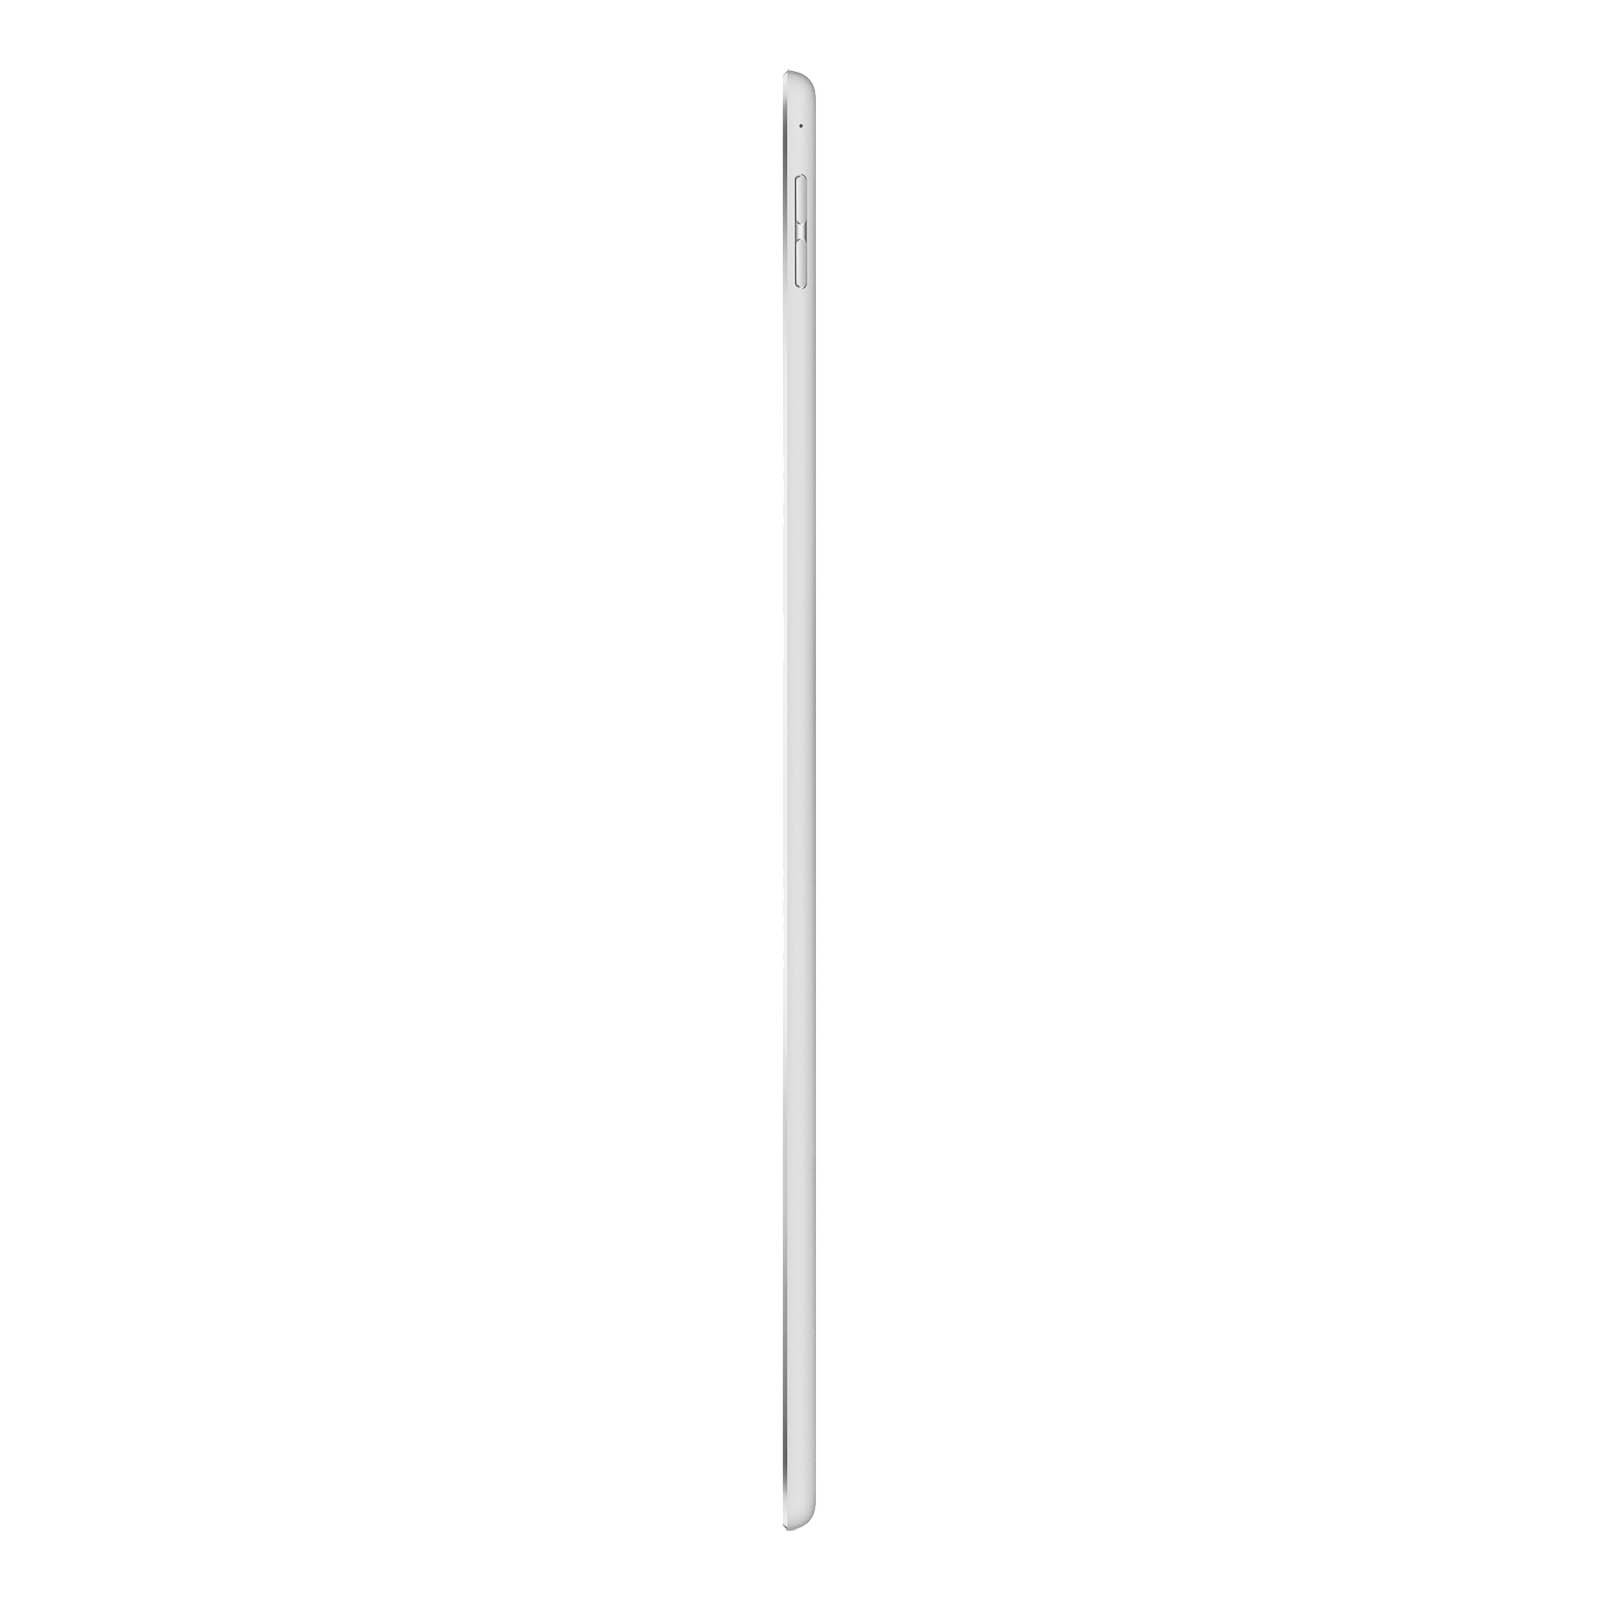 iPad Pro 12.9 Inch 1st Gen 256GB Silver Pristine - Unlocked